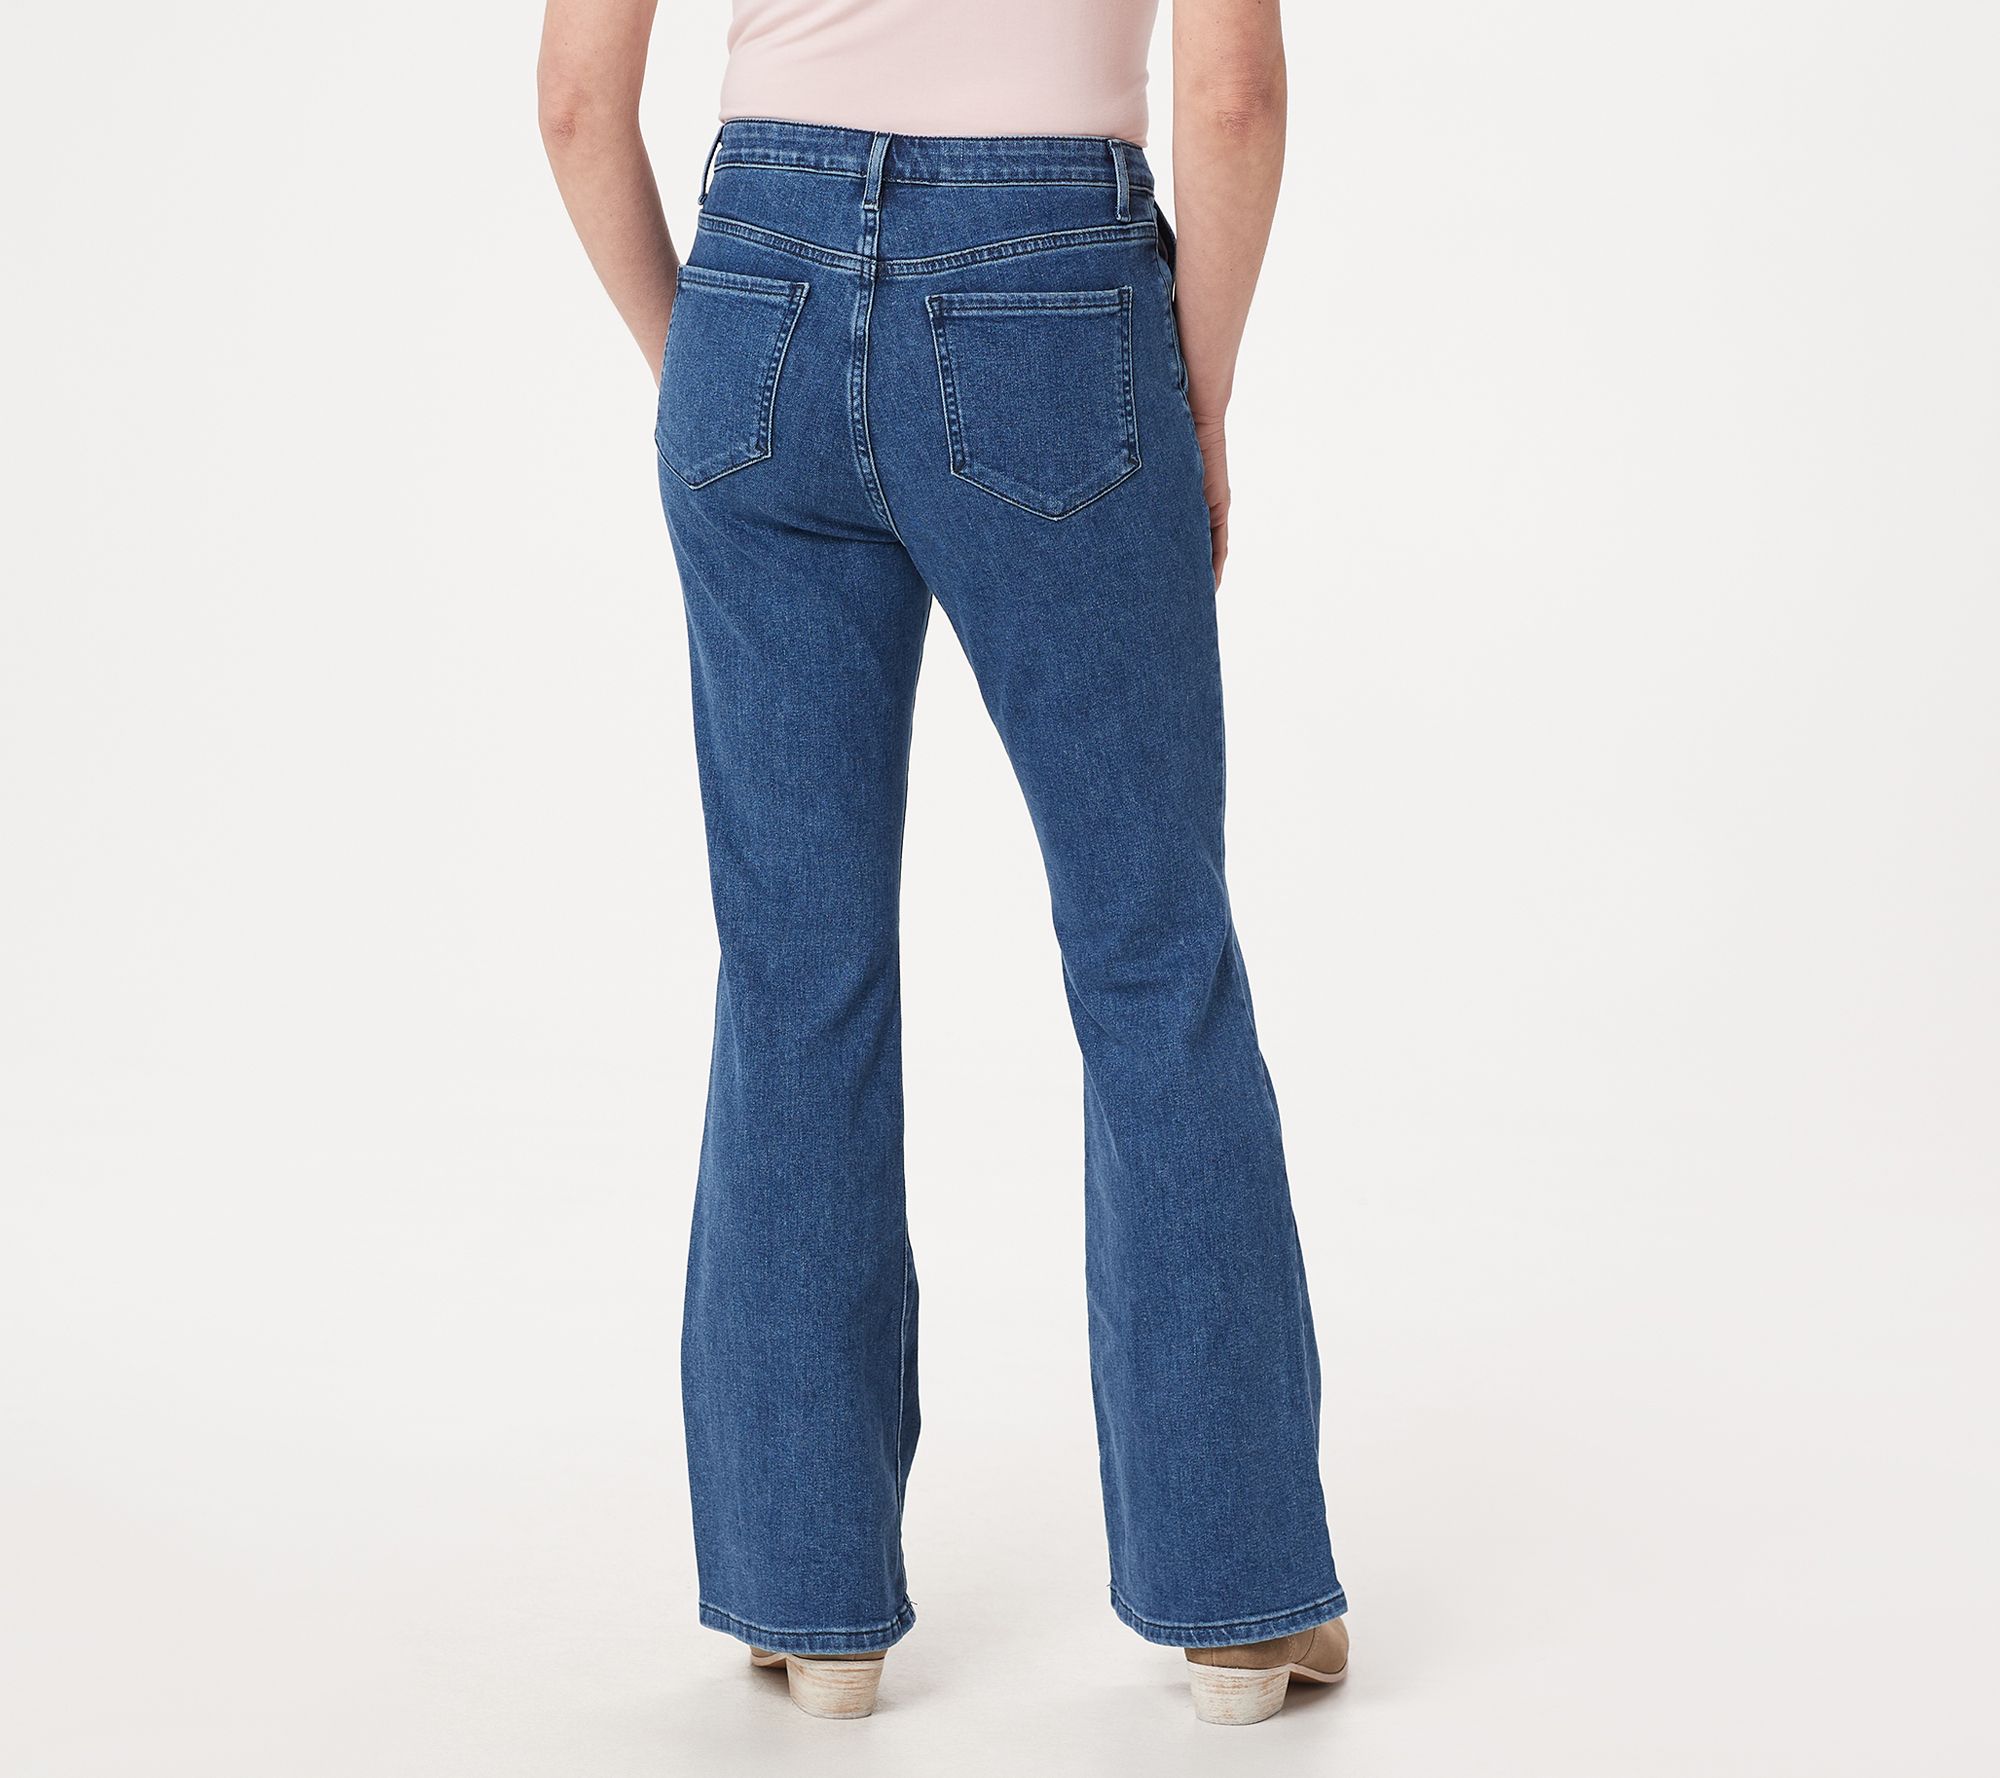 BROOKE SHIELDS Timeless Regular Flare Jeans- Indigo - QVC.com